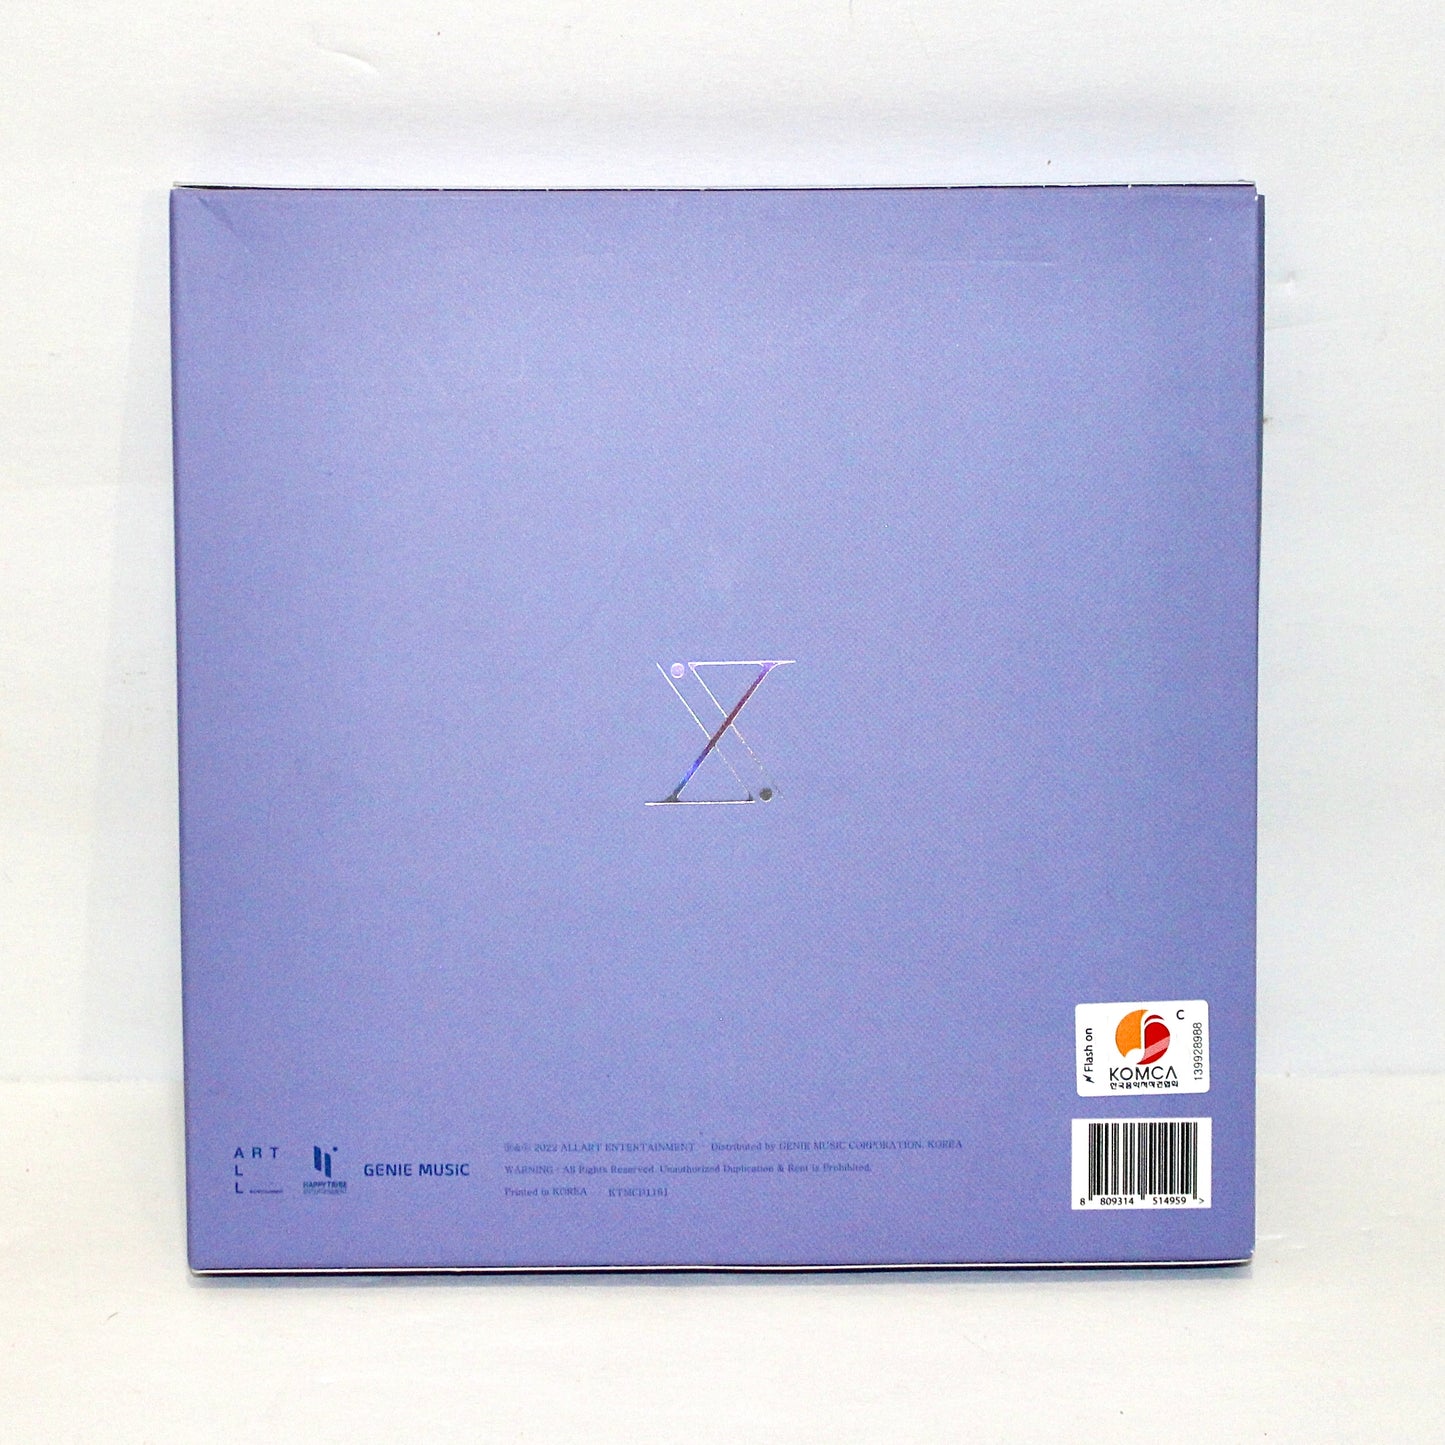 PIXY 3rd Mini Album: Reborn | Purple Ver.